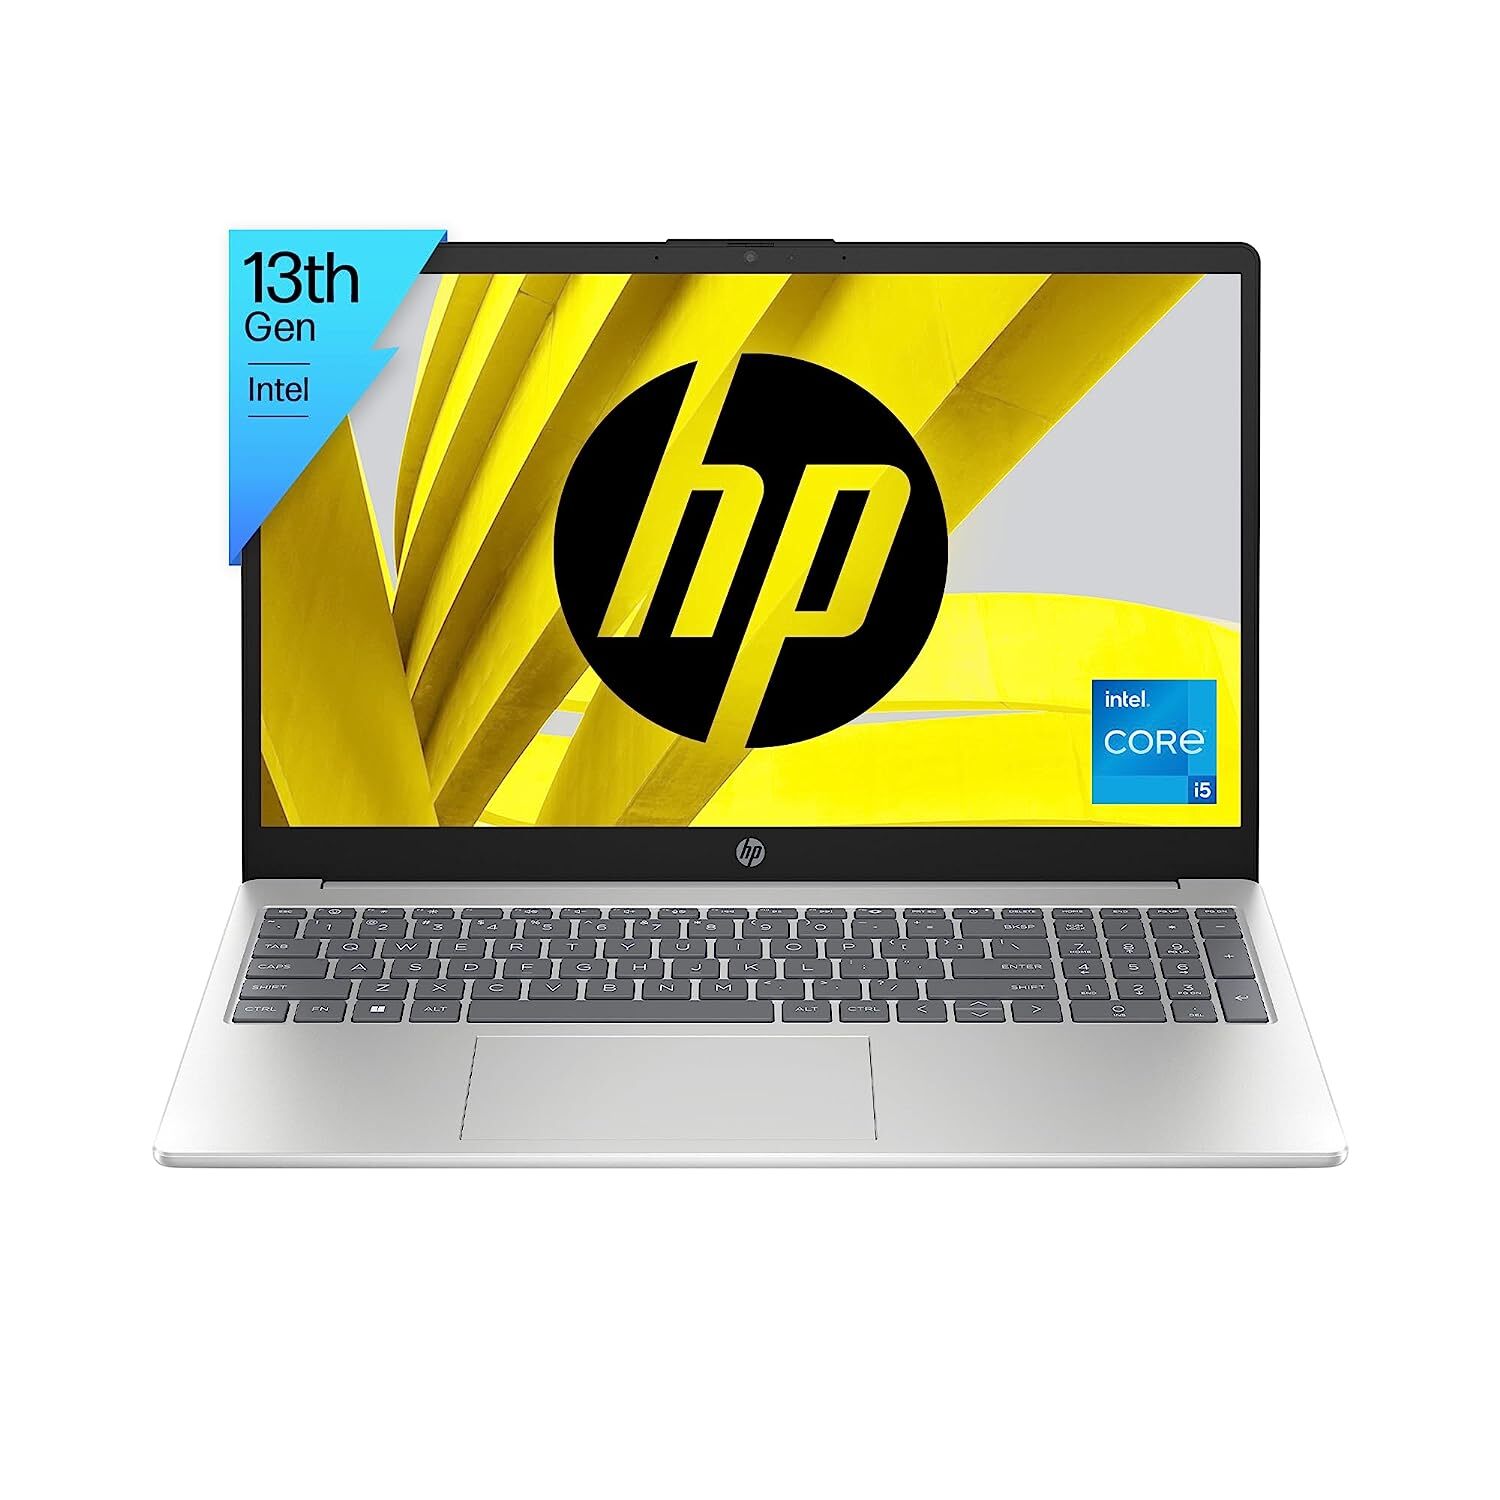 HP Laptop 15, 13th Gen Intel Core i5-1335U, 15.6-inch (39.6 cm), FHD, 8GB DDR4, 512GB SSD, Intel Iris Xe Graphics, FHD Camera w/Privacy Shutter (Win 11, MSO 2021, Silver, 1.59 kg), fd0011TU